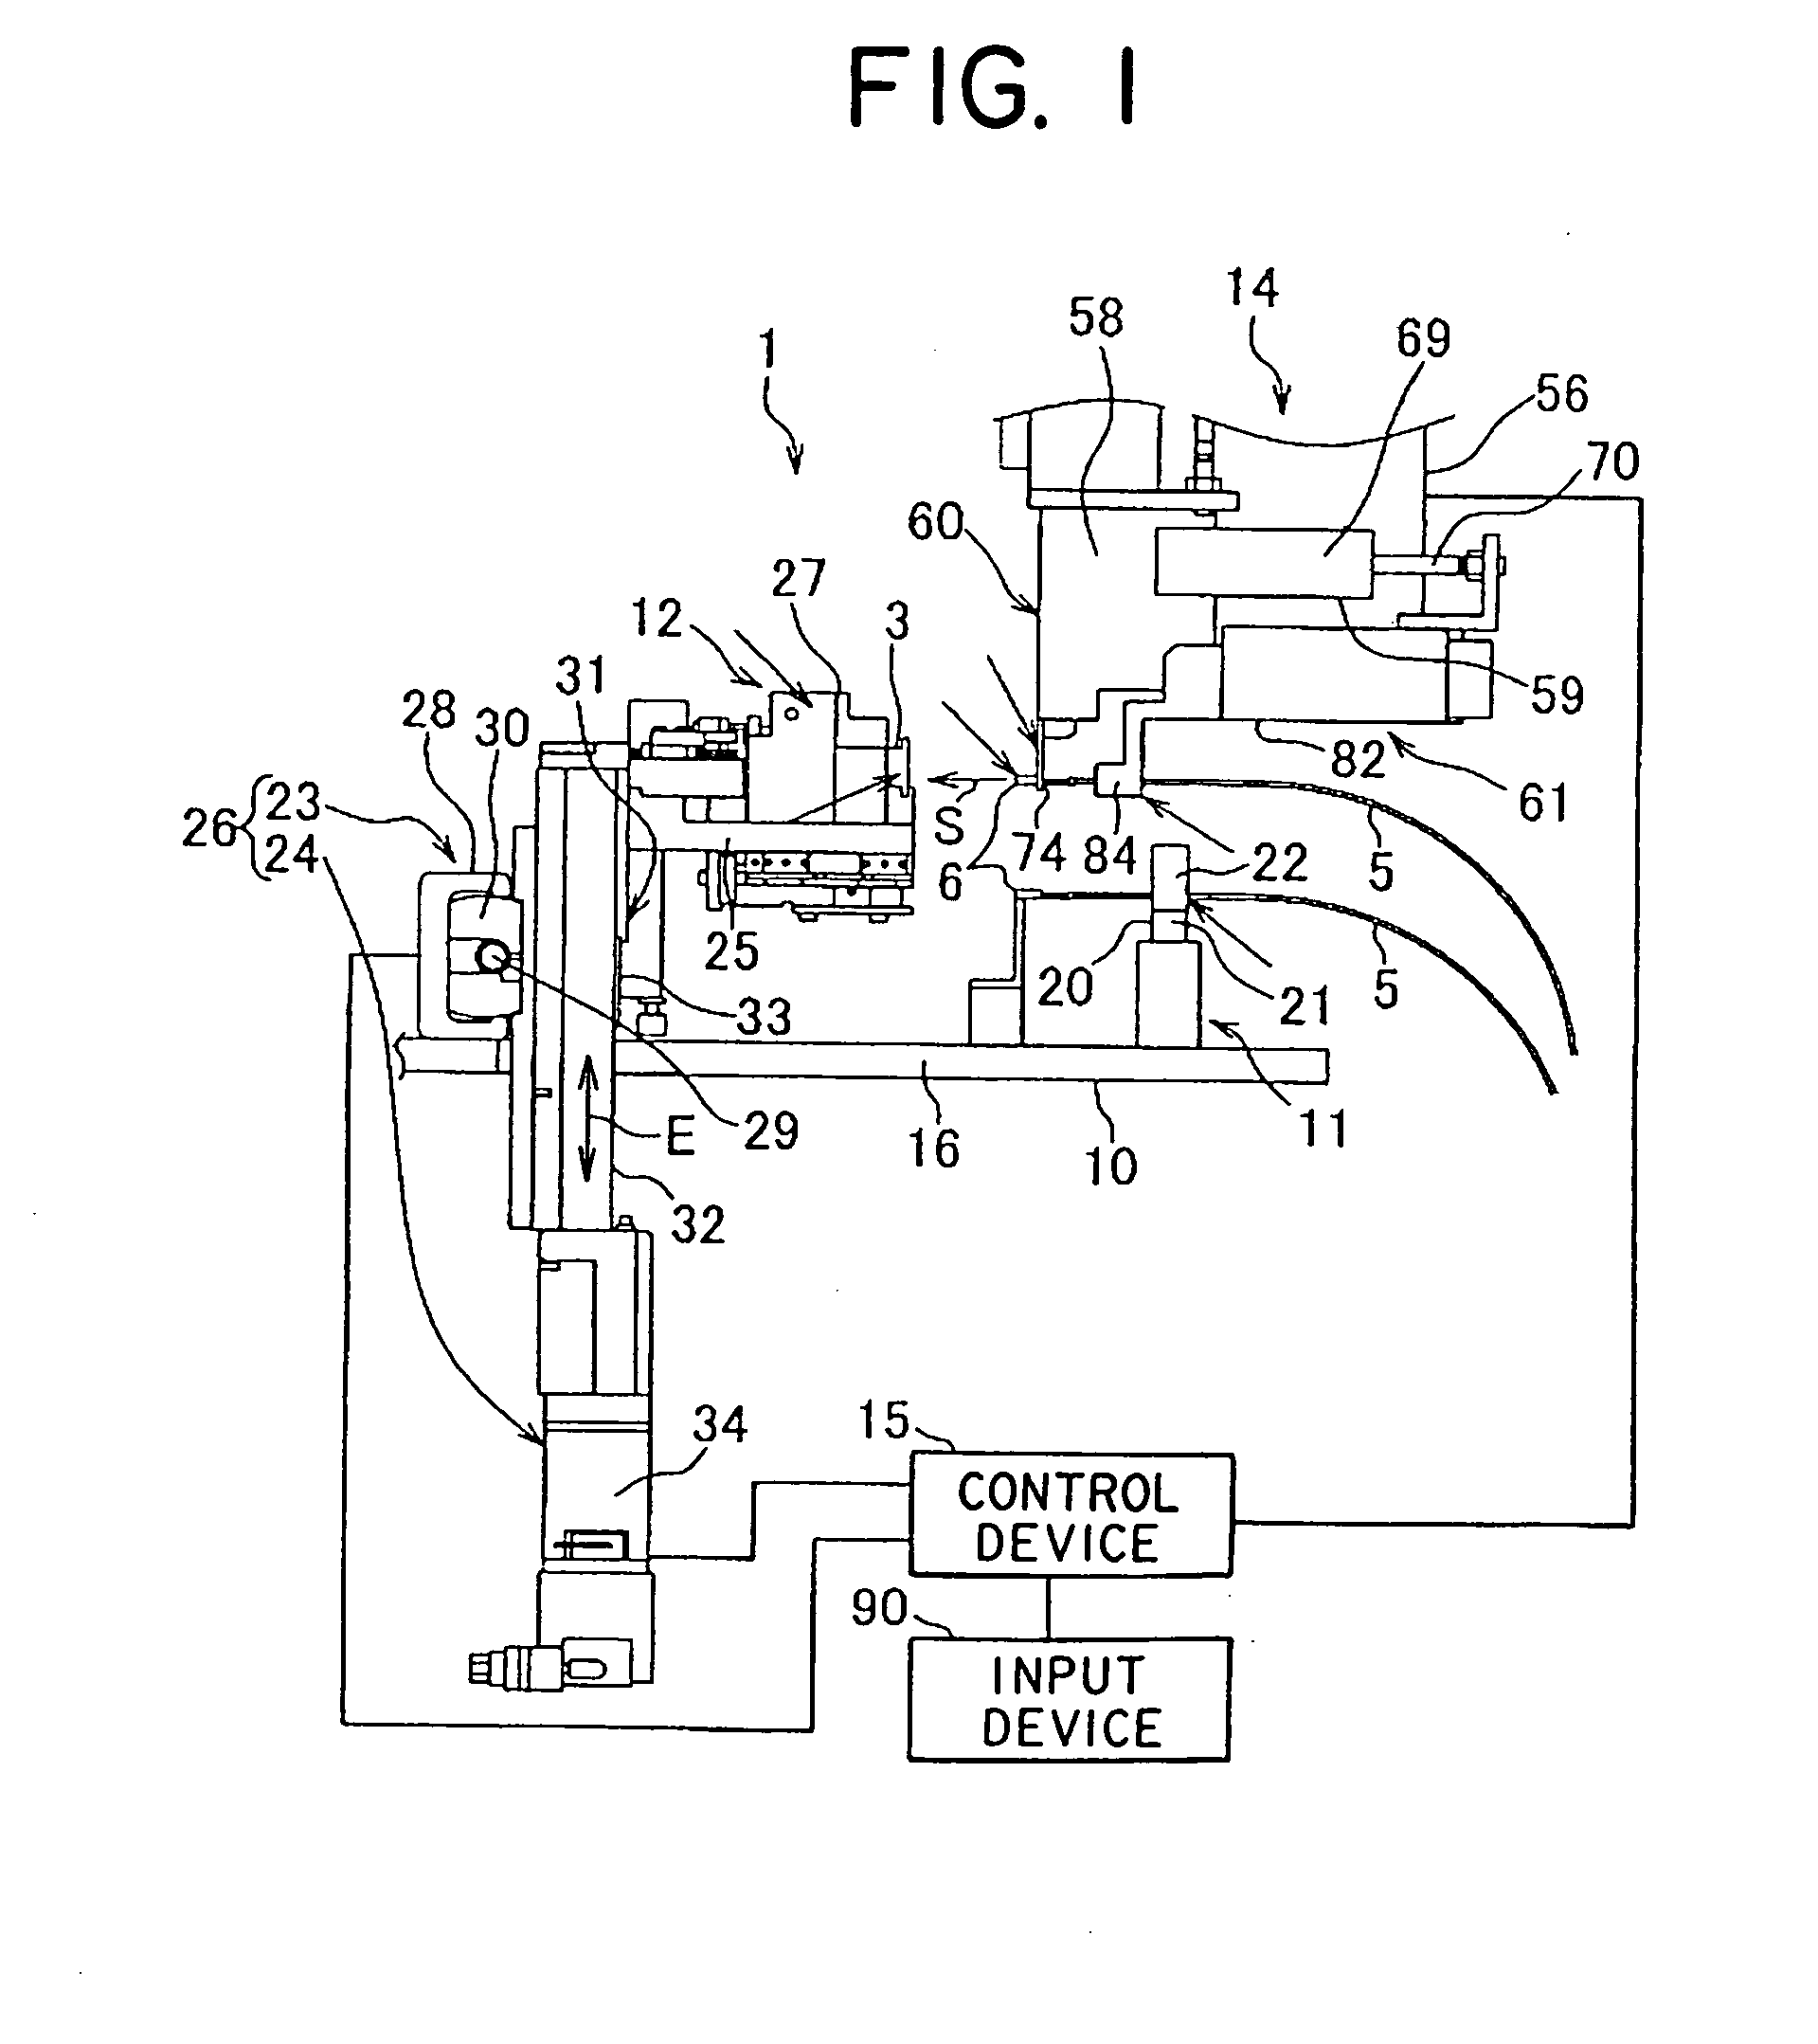 Terminal insertion apparatus